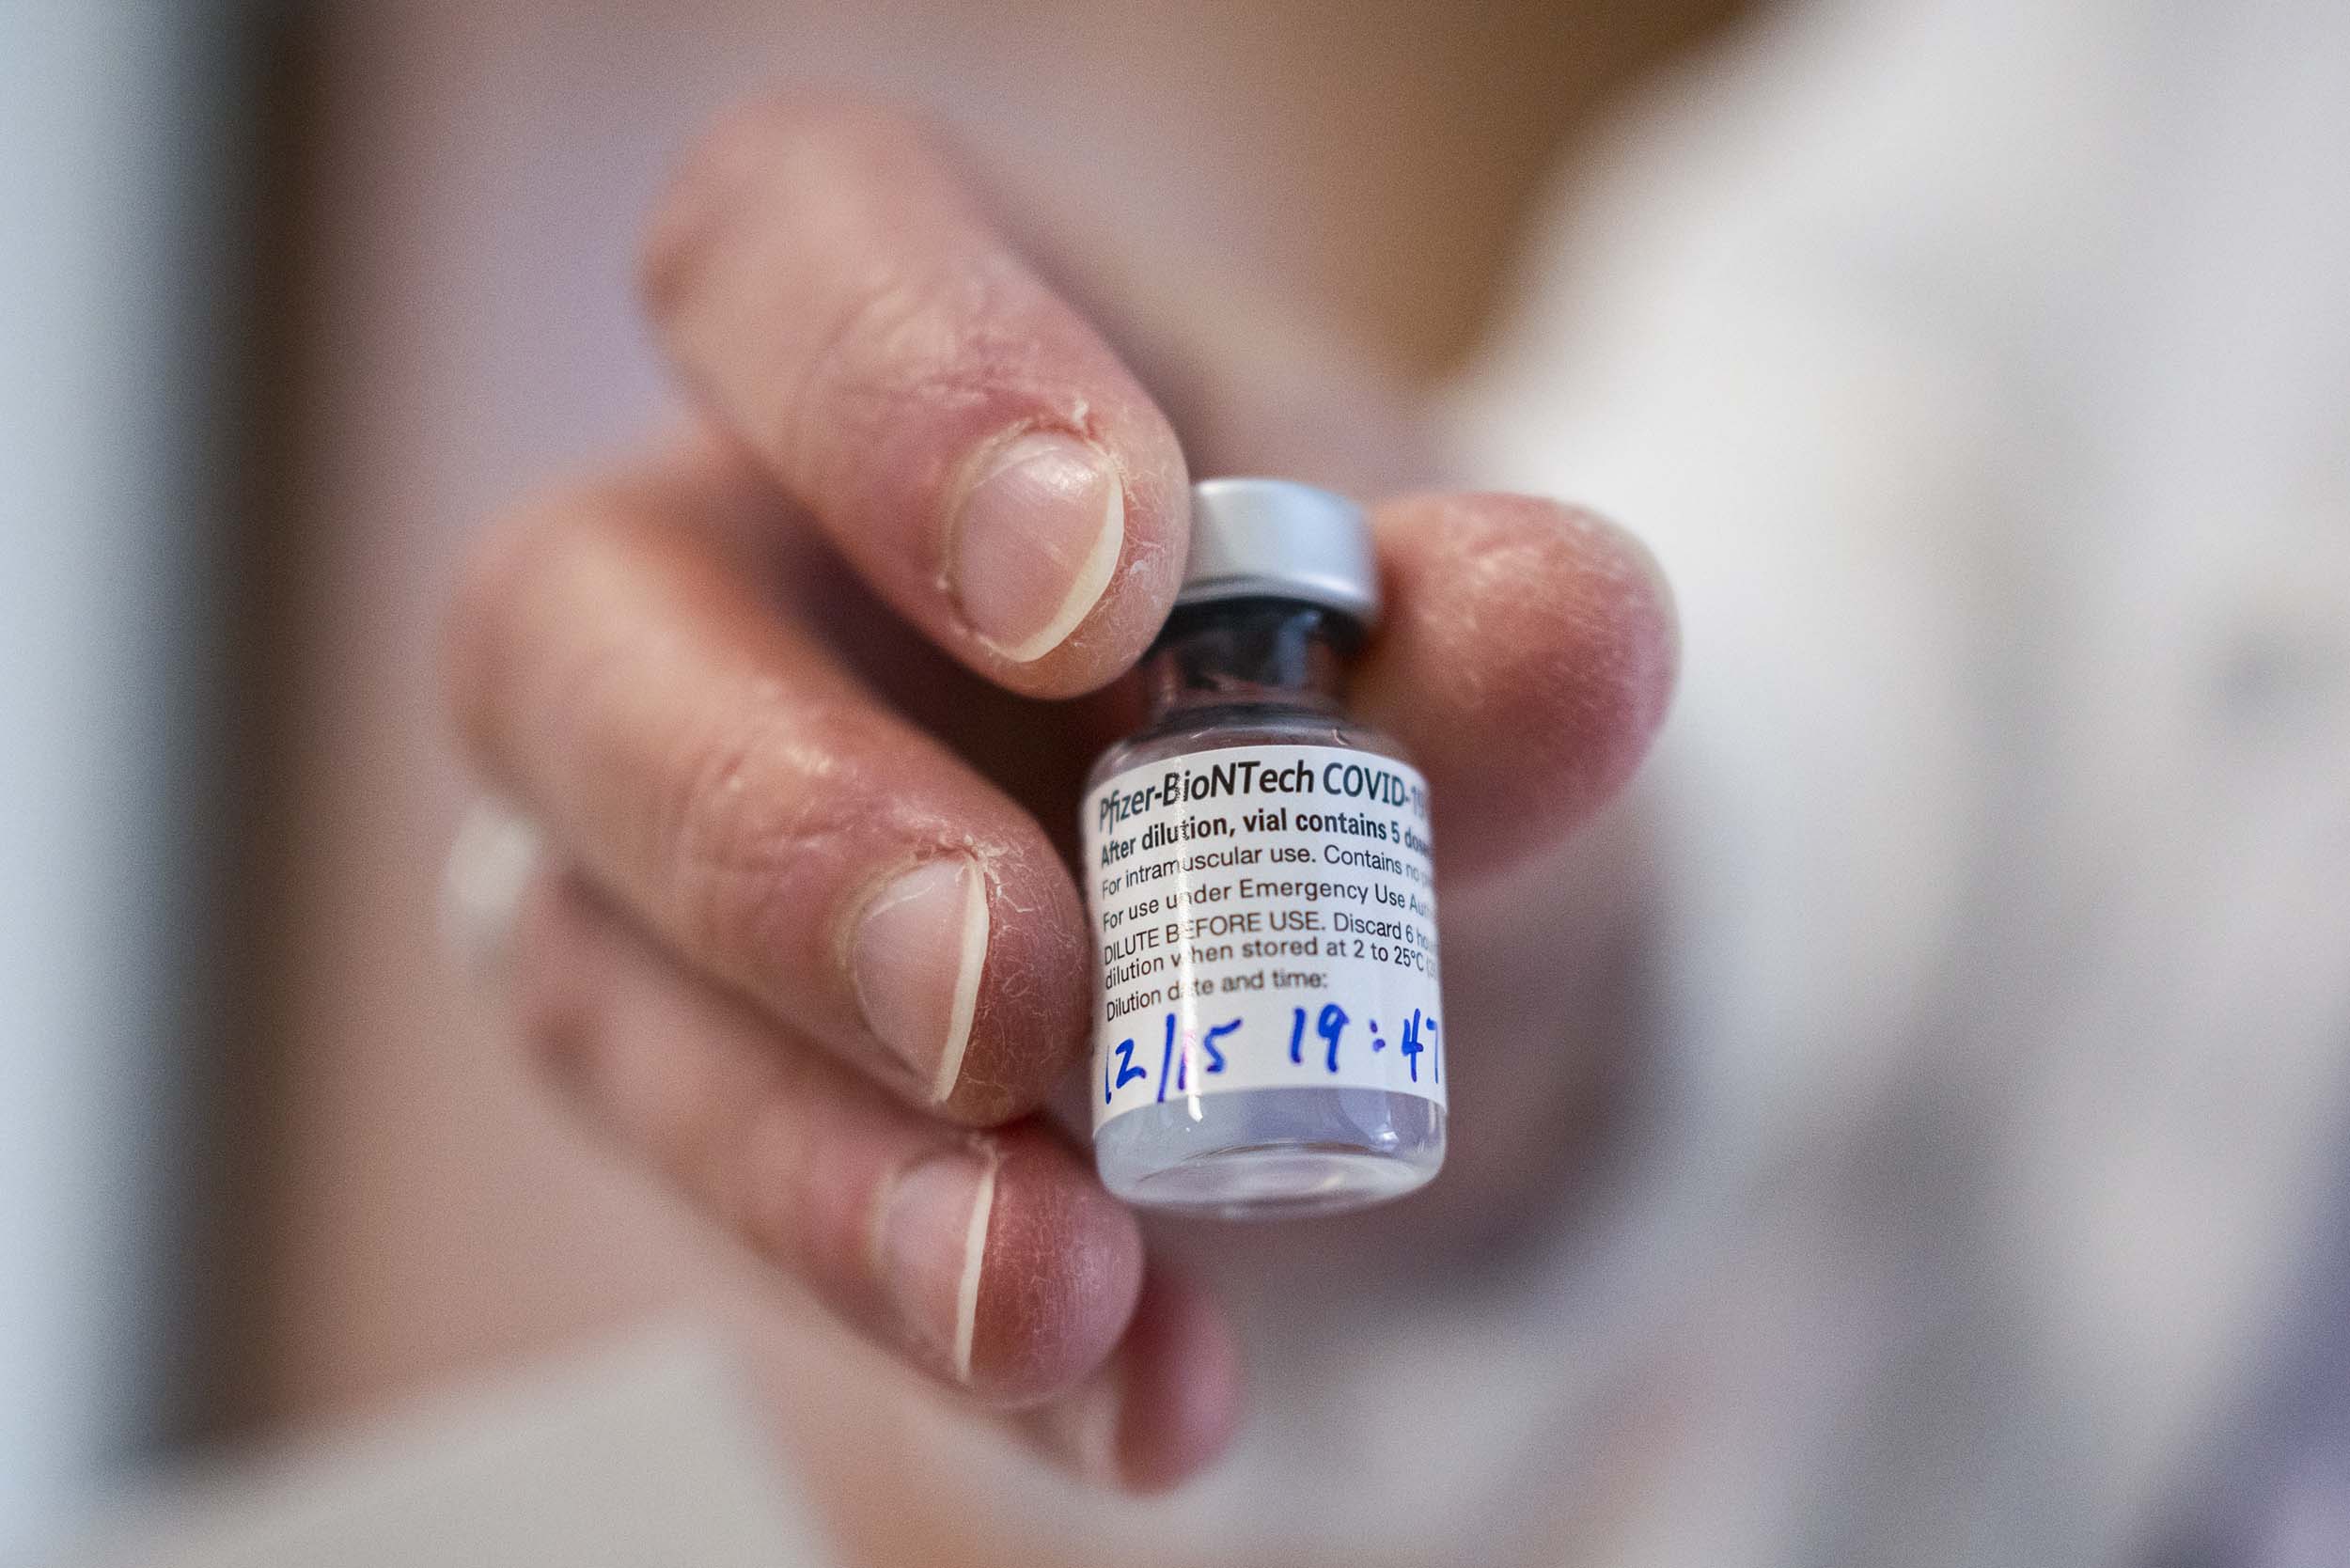 Pfizer vaccine vial